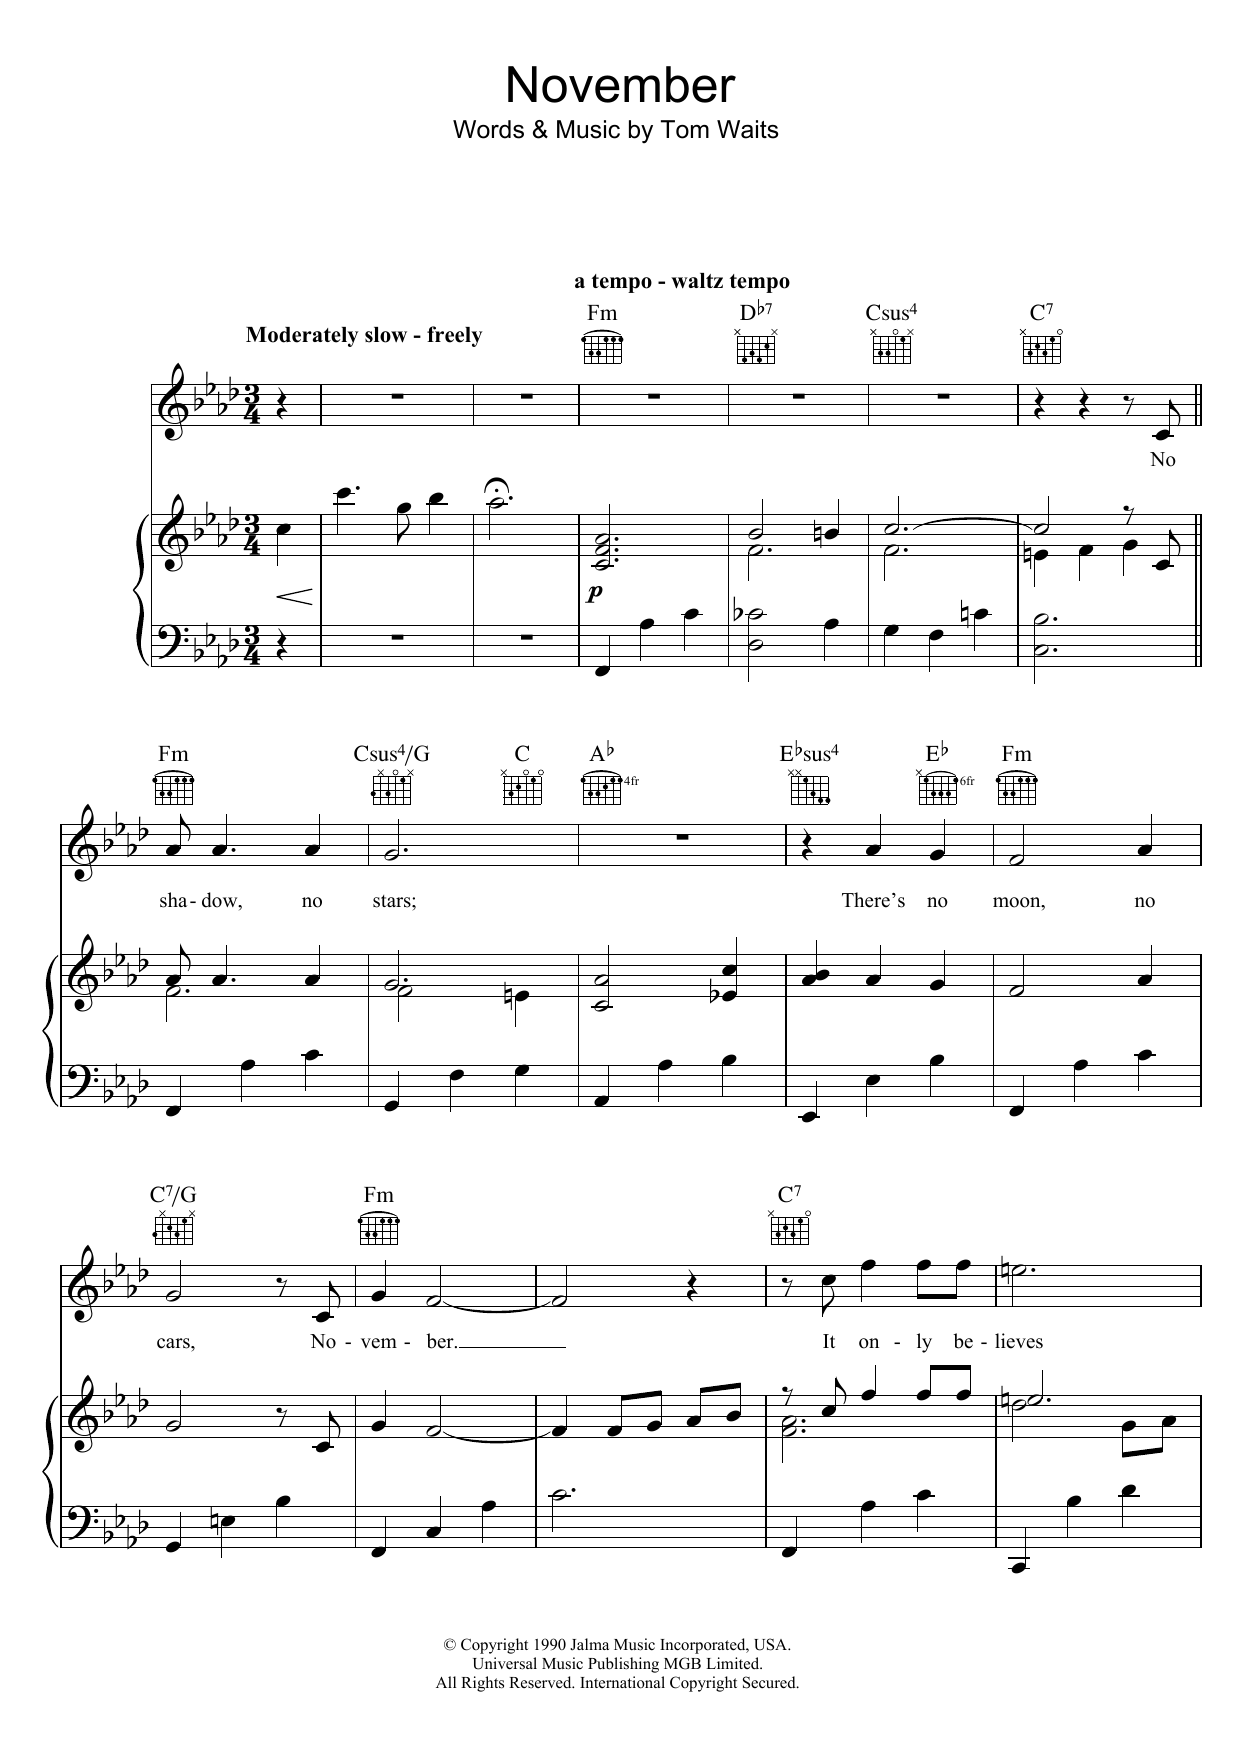 Tom Waits November Sheet Music Notes & Chords for Piano, Vocal & Guitar - Download or Print PDF